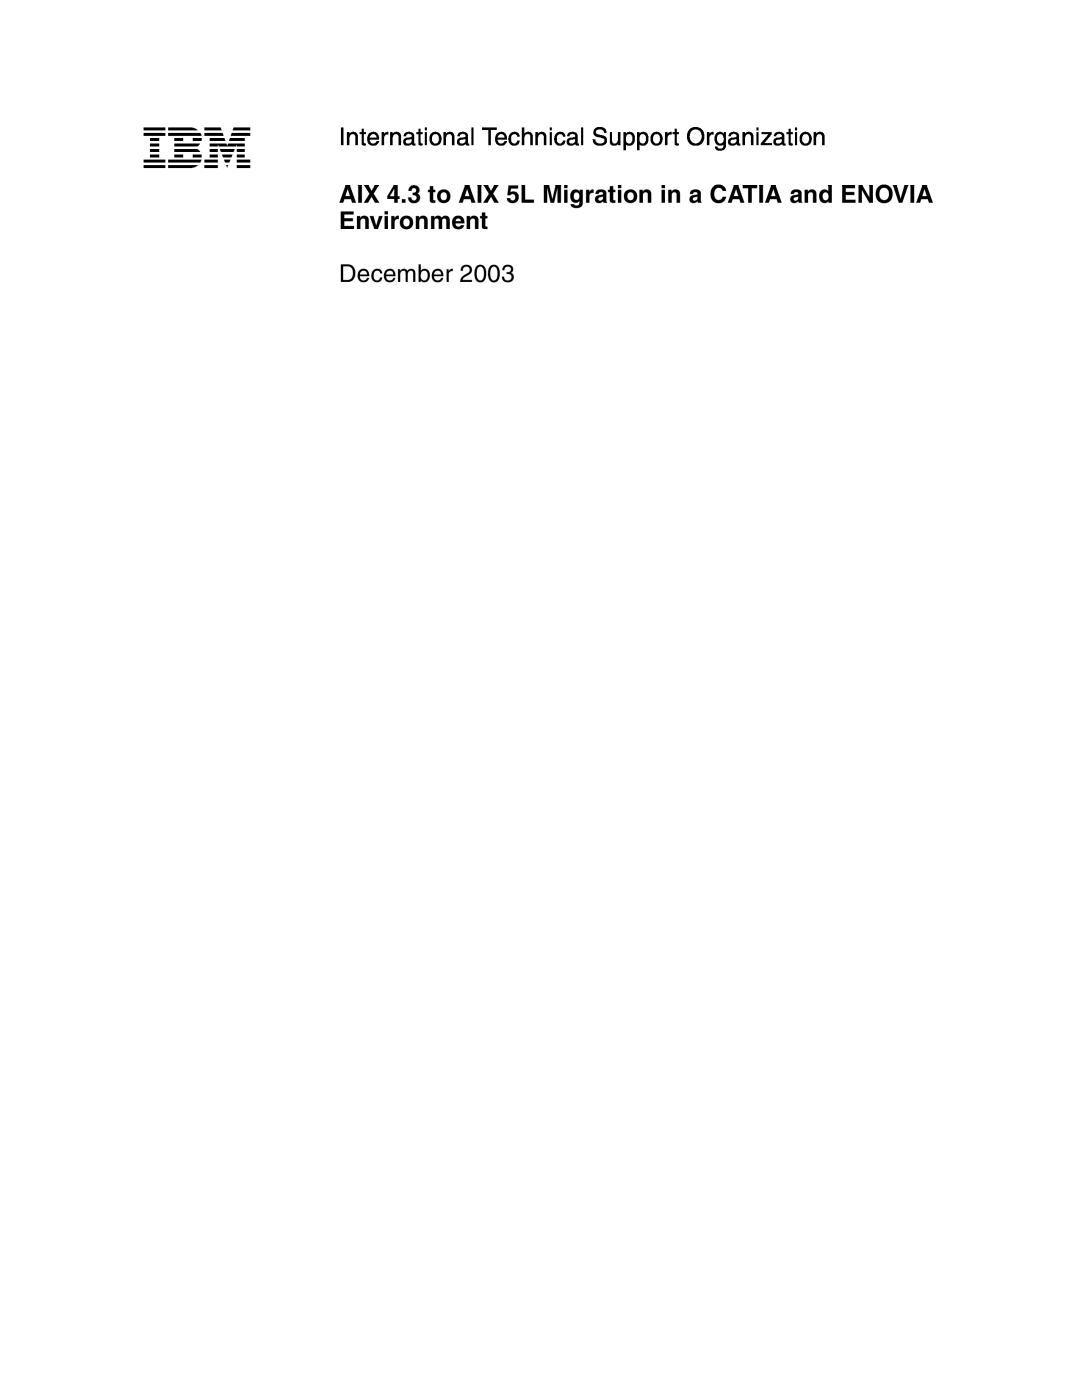 IBM AIX 4.3, AIX5L manual International Technical Support Organization, December 